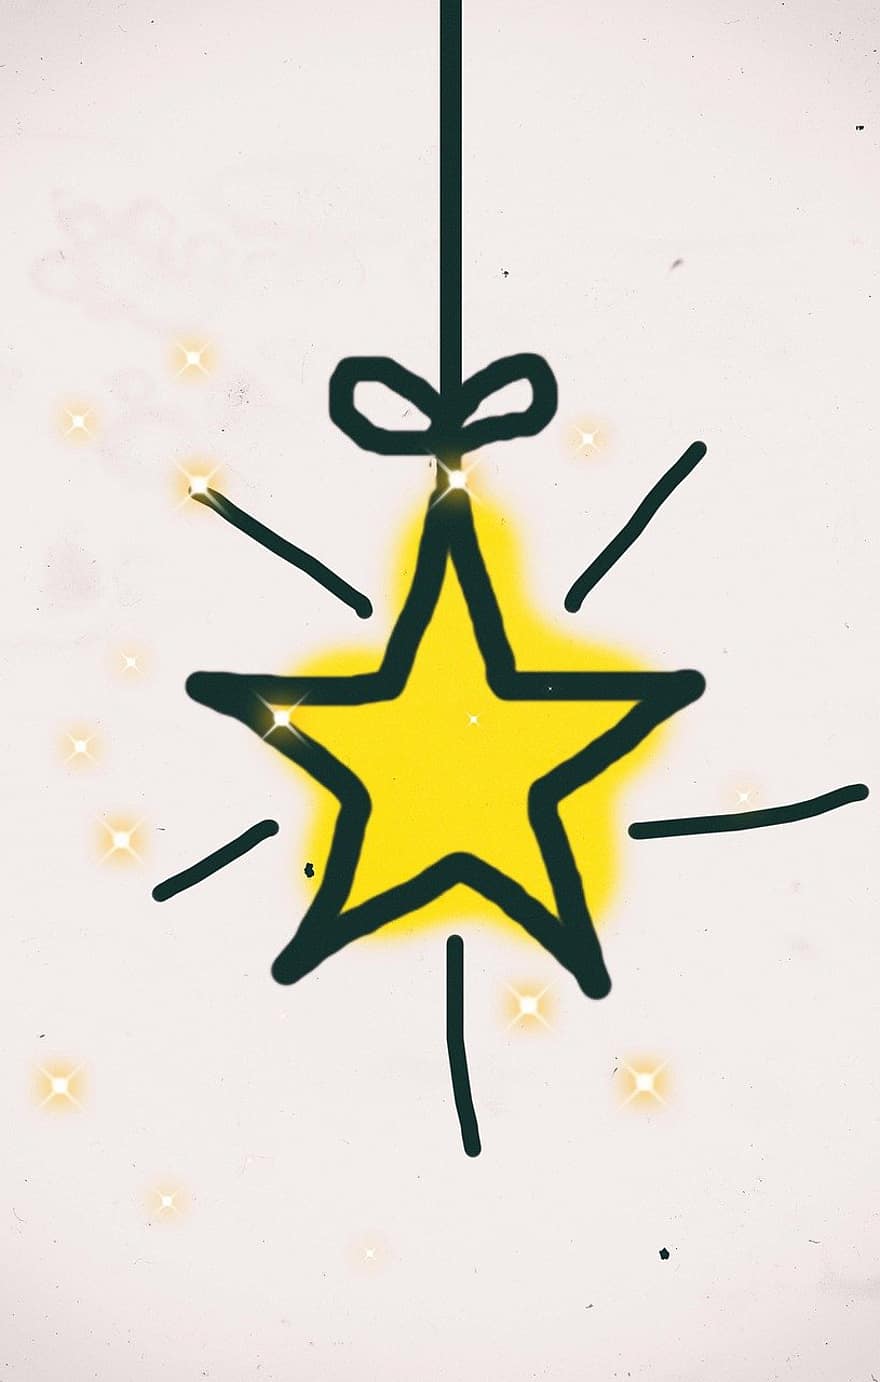 Star, Shine, Light, Christmas, Bethlehem, backgrounds, celebration, decoration, abstract, winter, illustration